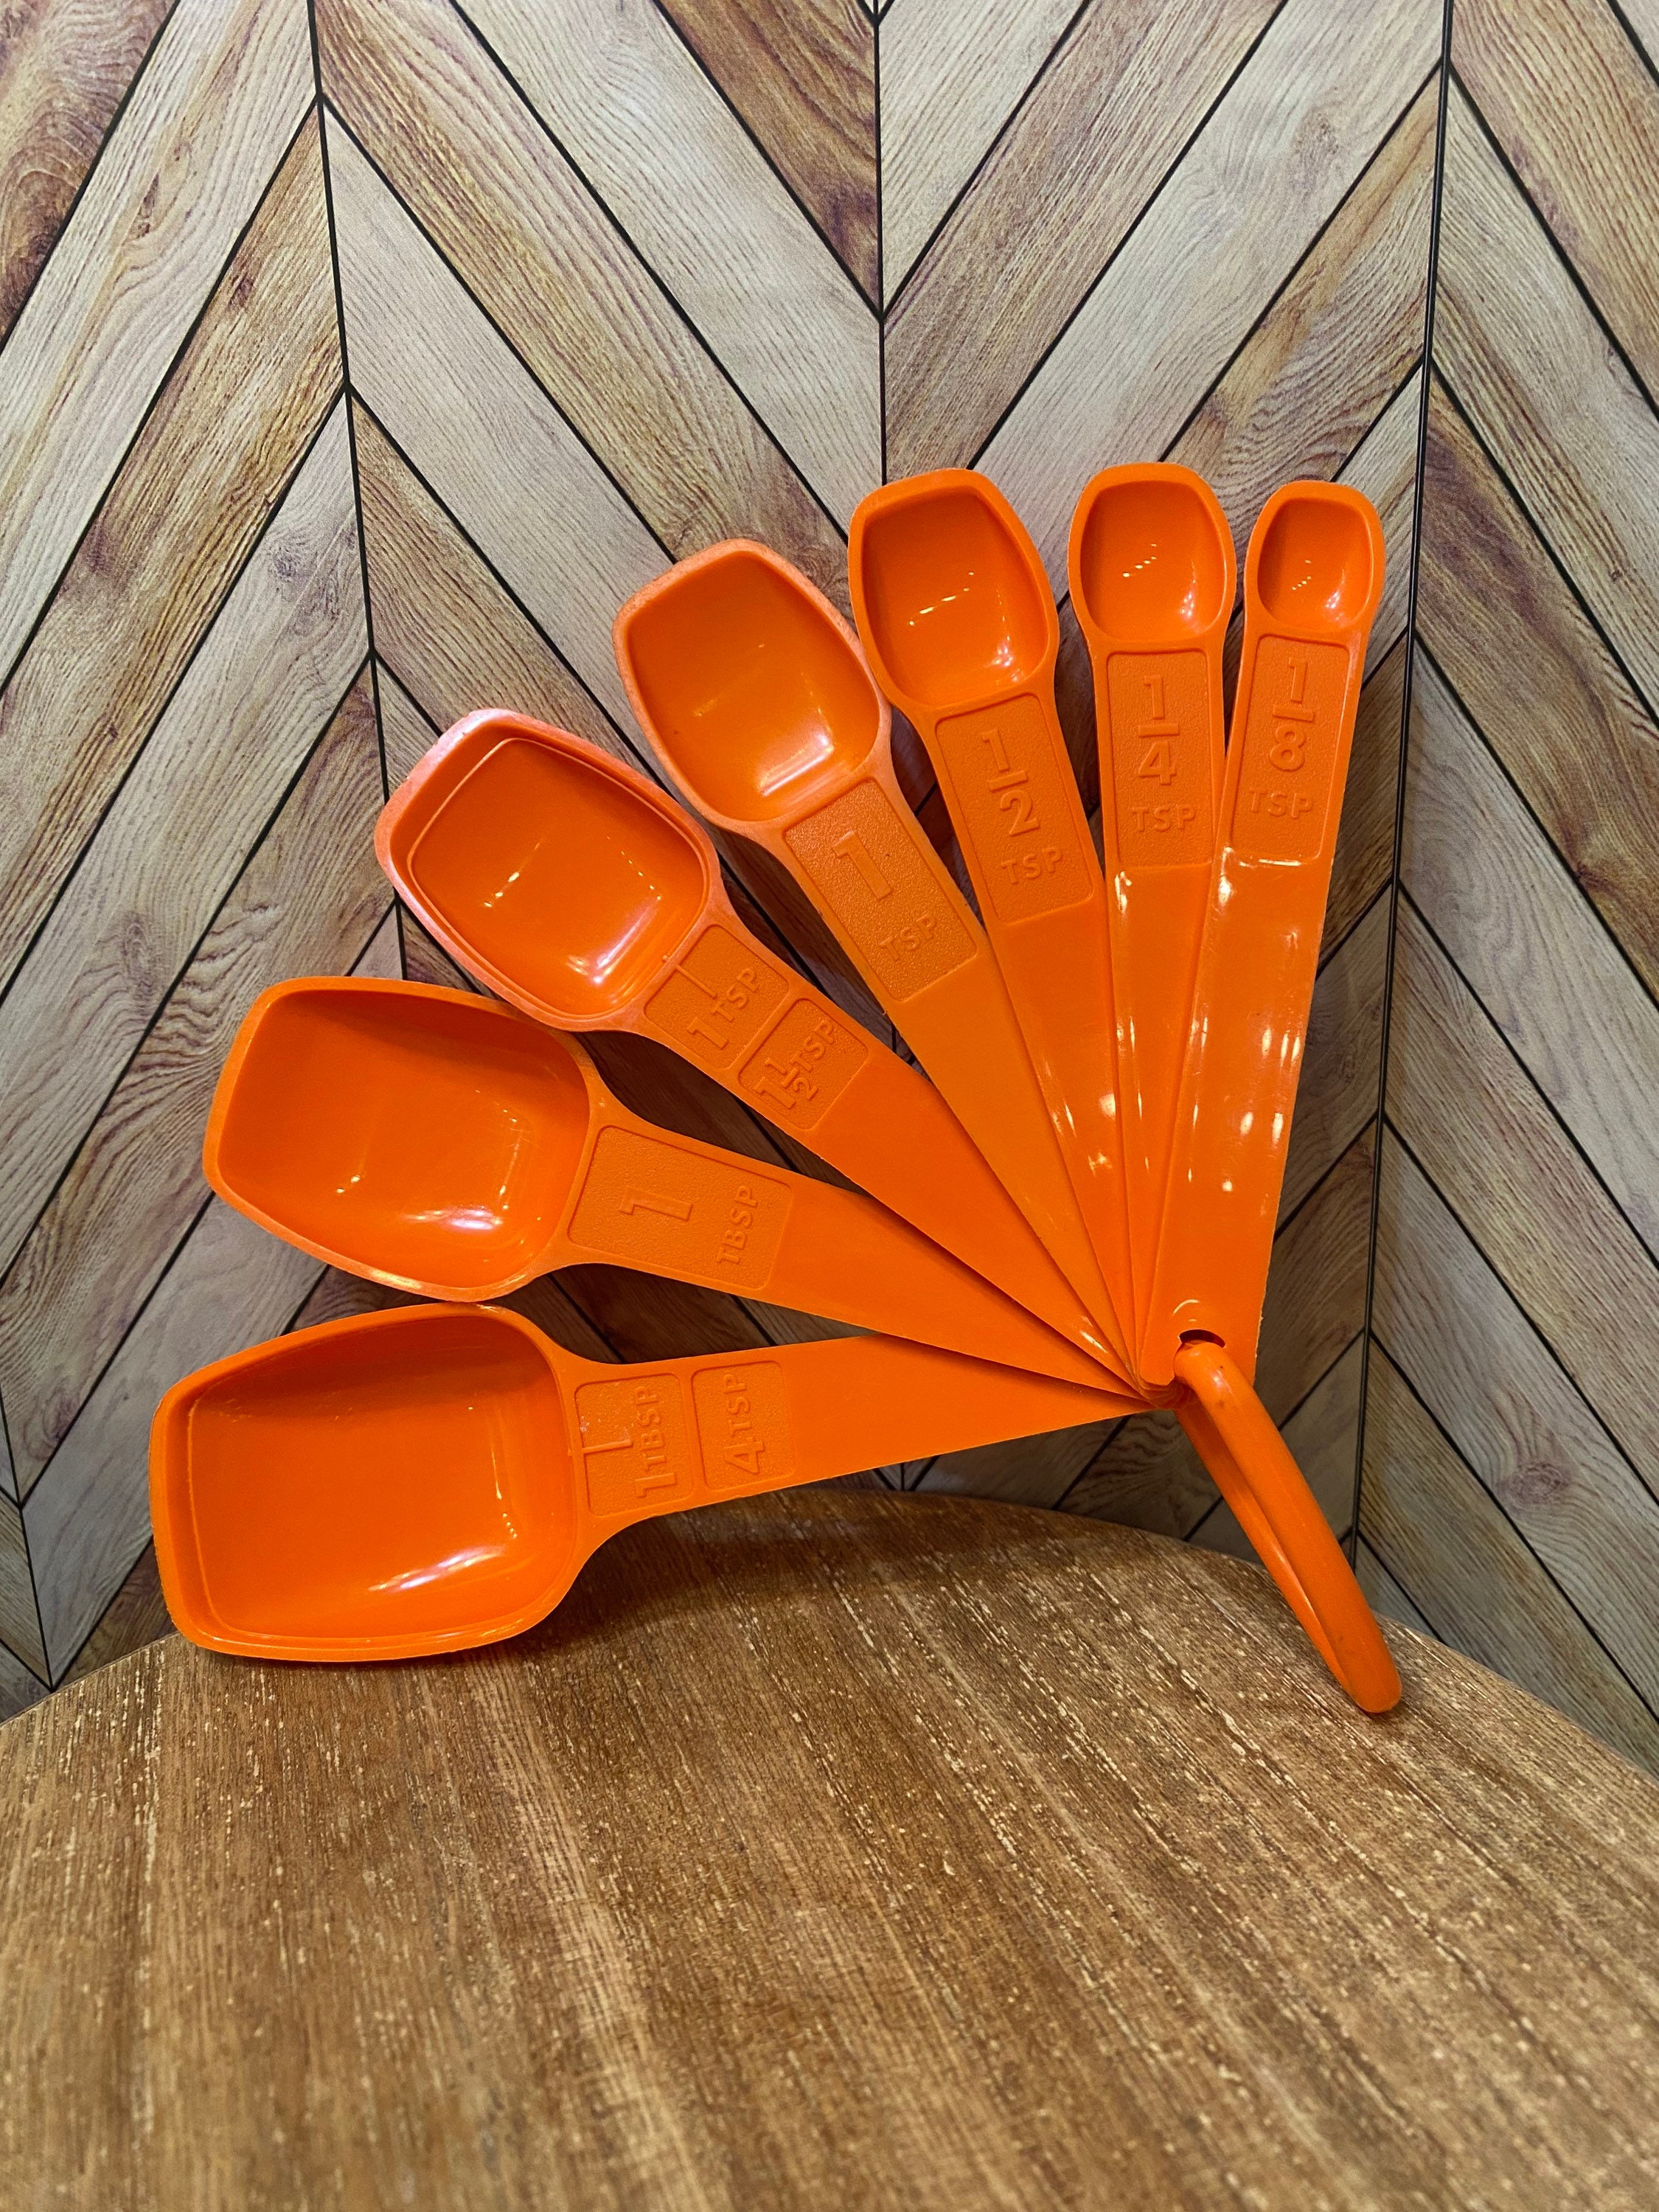 4 Tupperware Measuring Spoons, vintage - household items - by